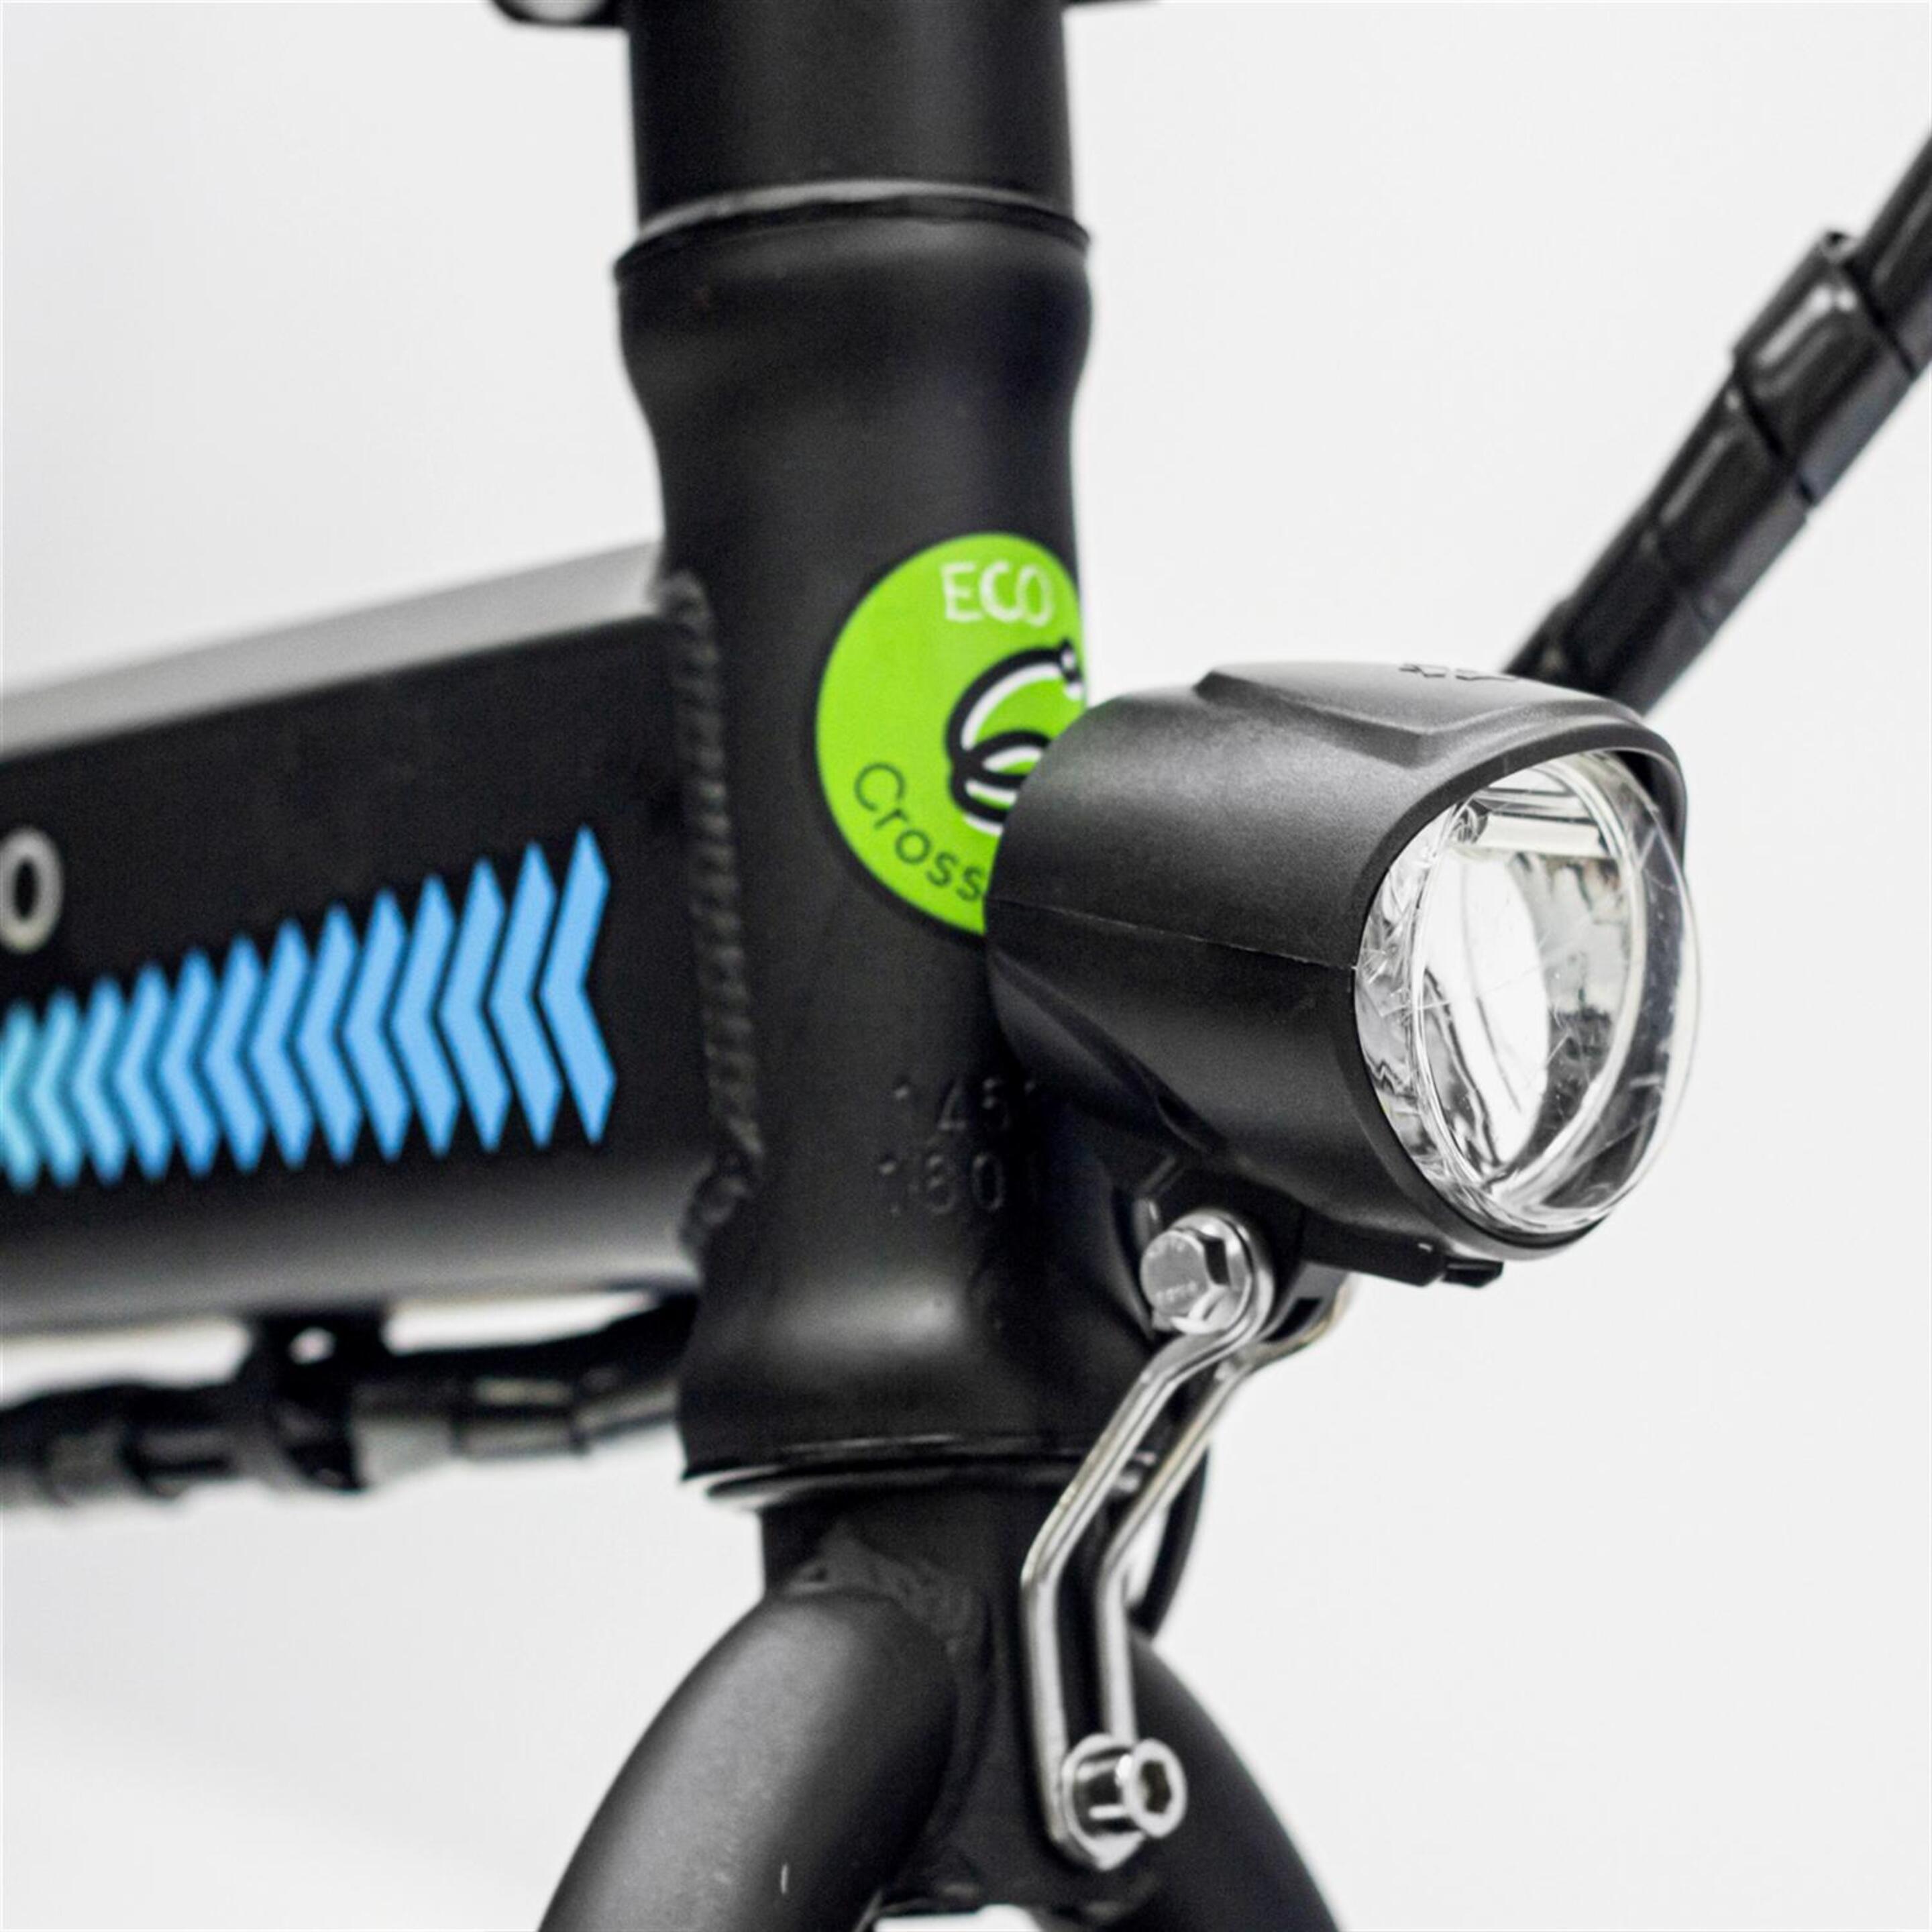 Smartgyro Crosscity 20" - E-Bike Plegable